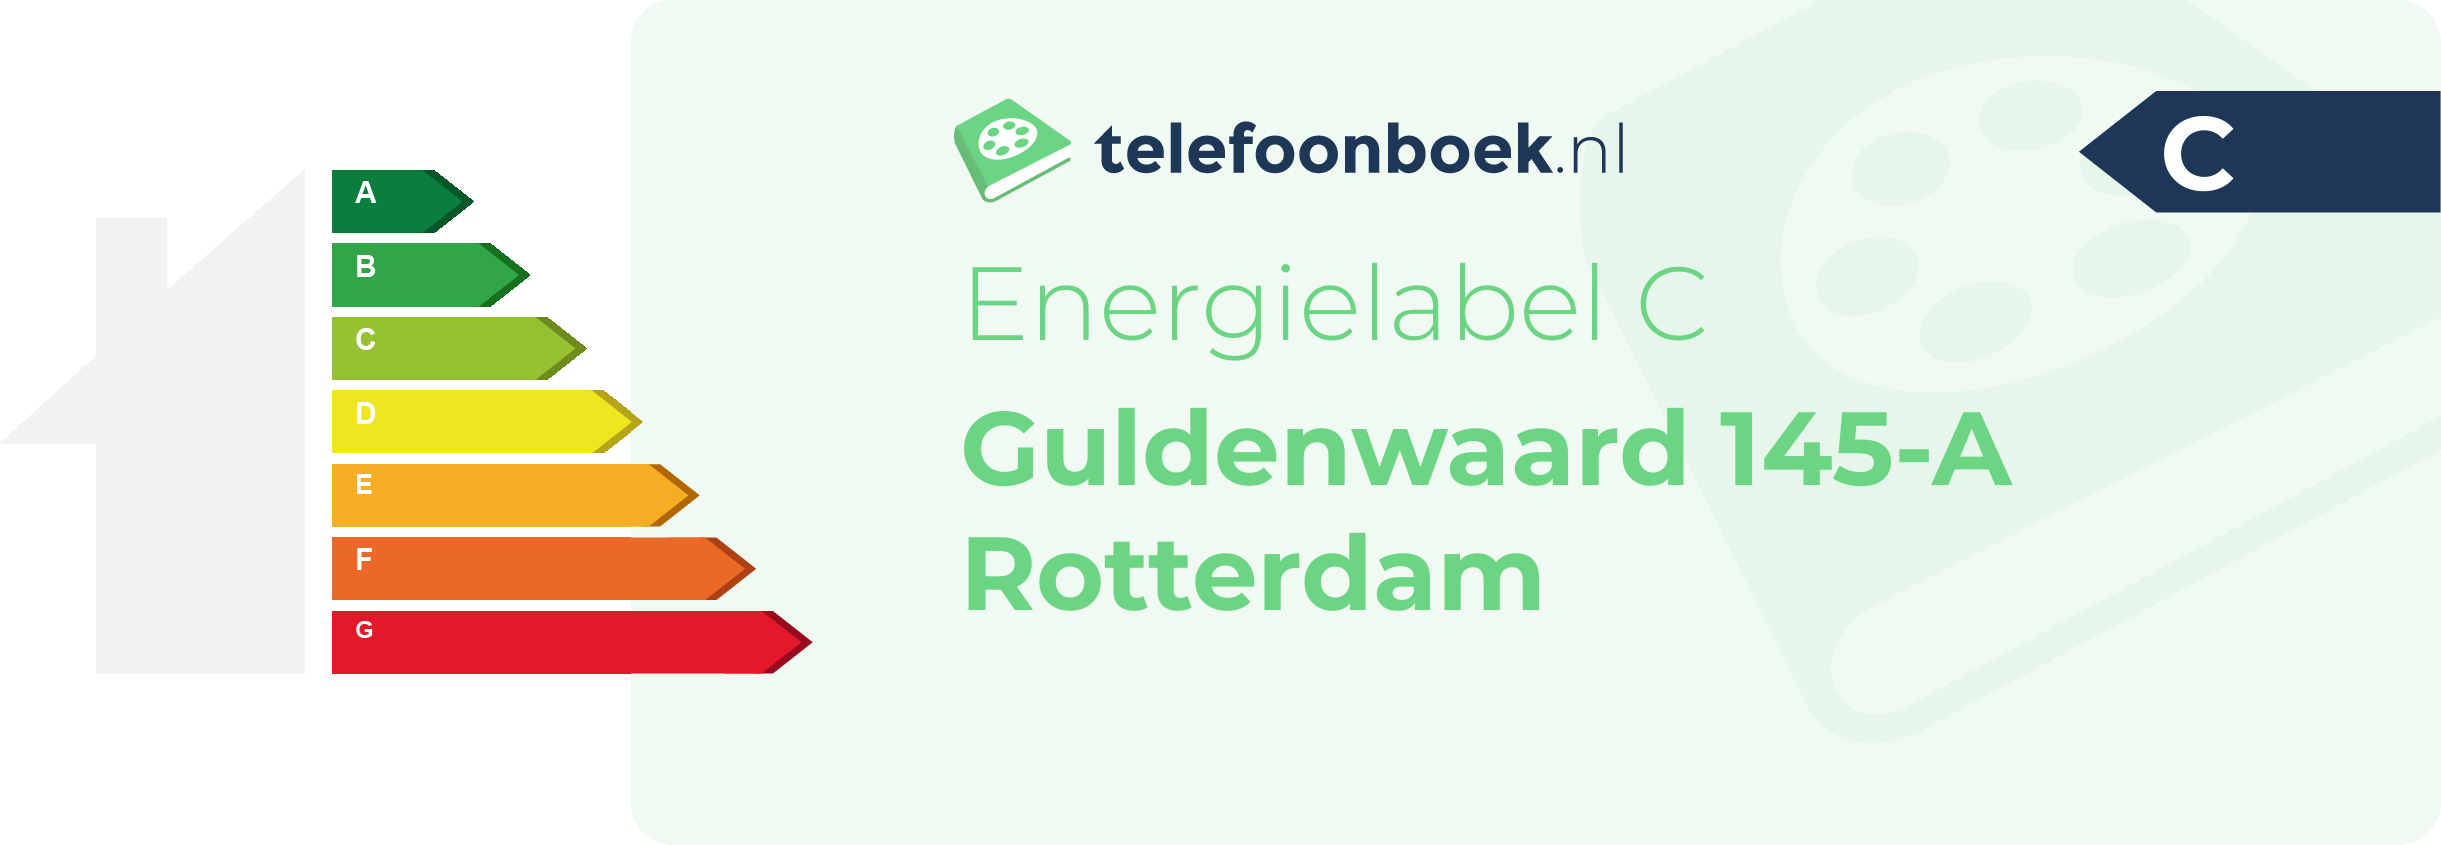 Energielabel Guldenwaard 145-A Rotterdam